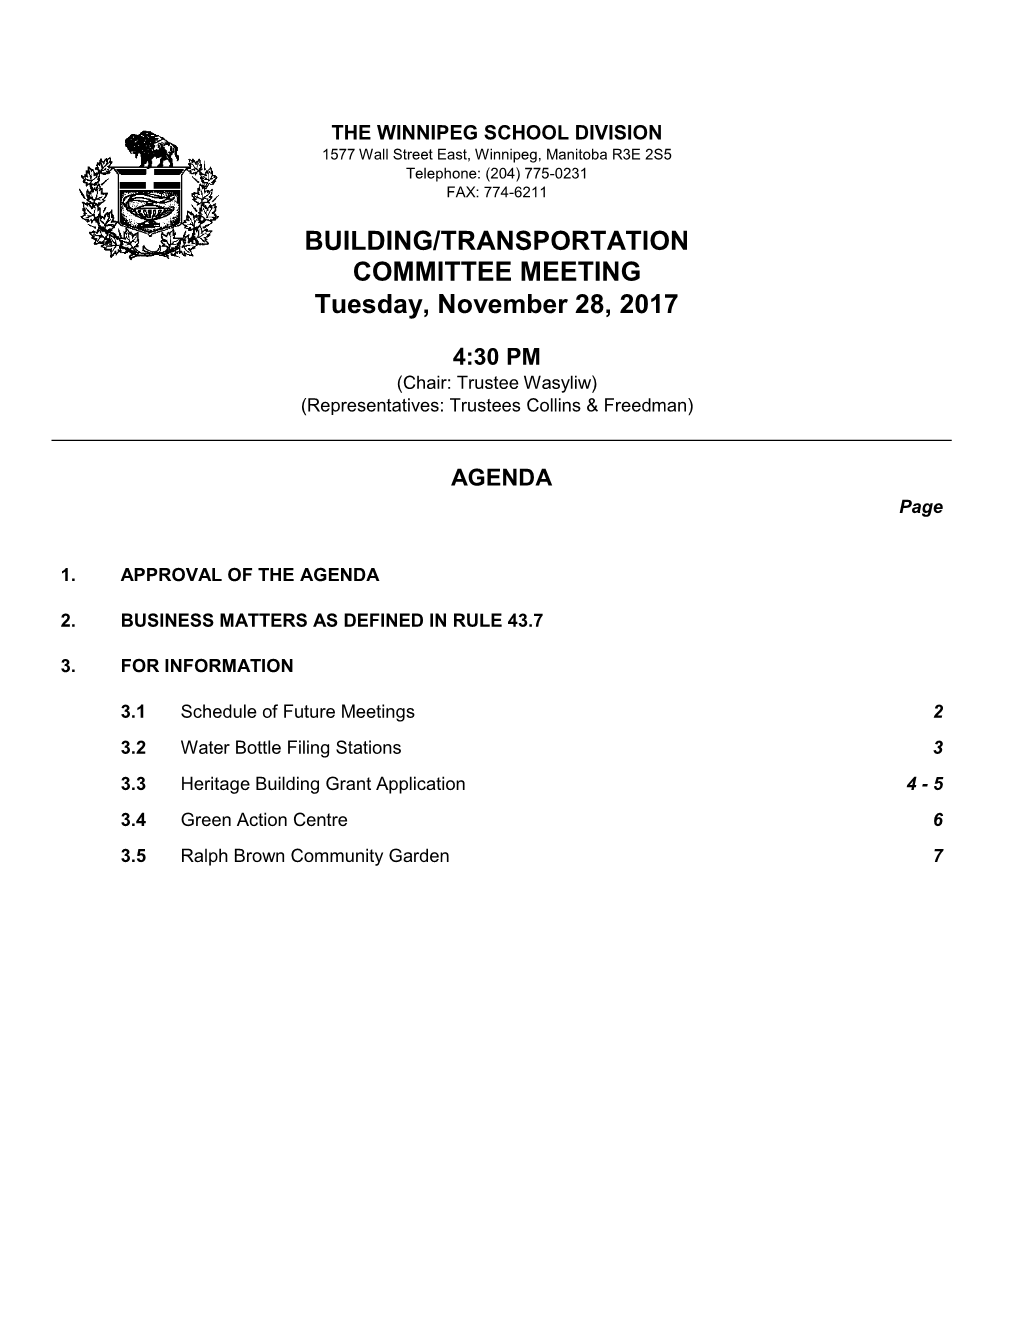 Building/Transportation Committee November 28, 2017